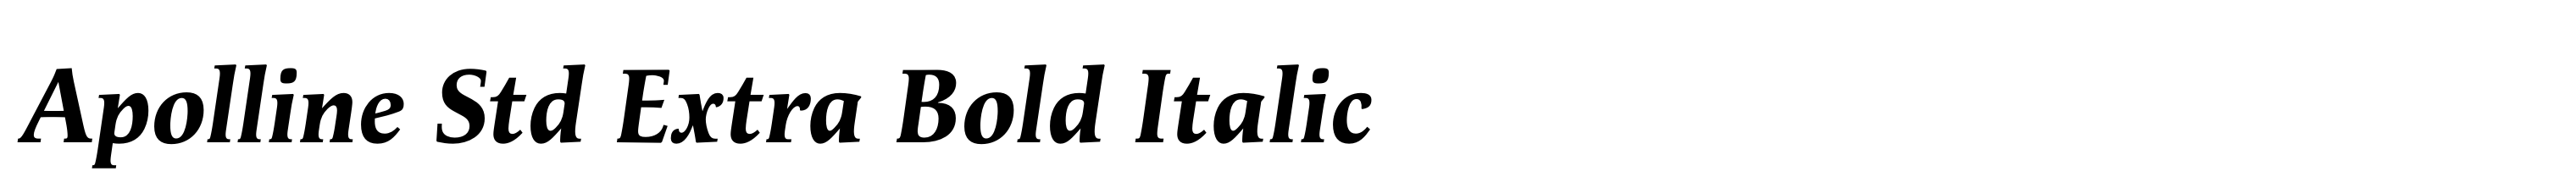 Apolline Std Extra Bold Italic